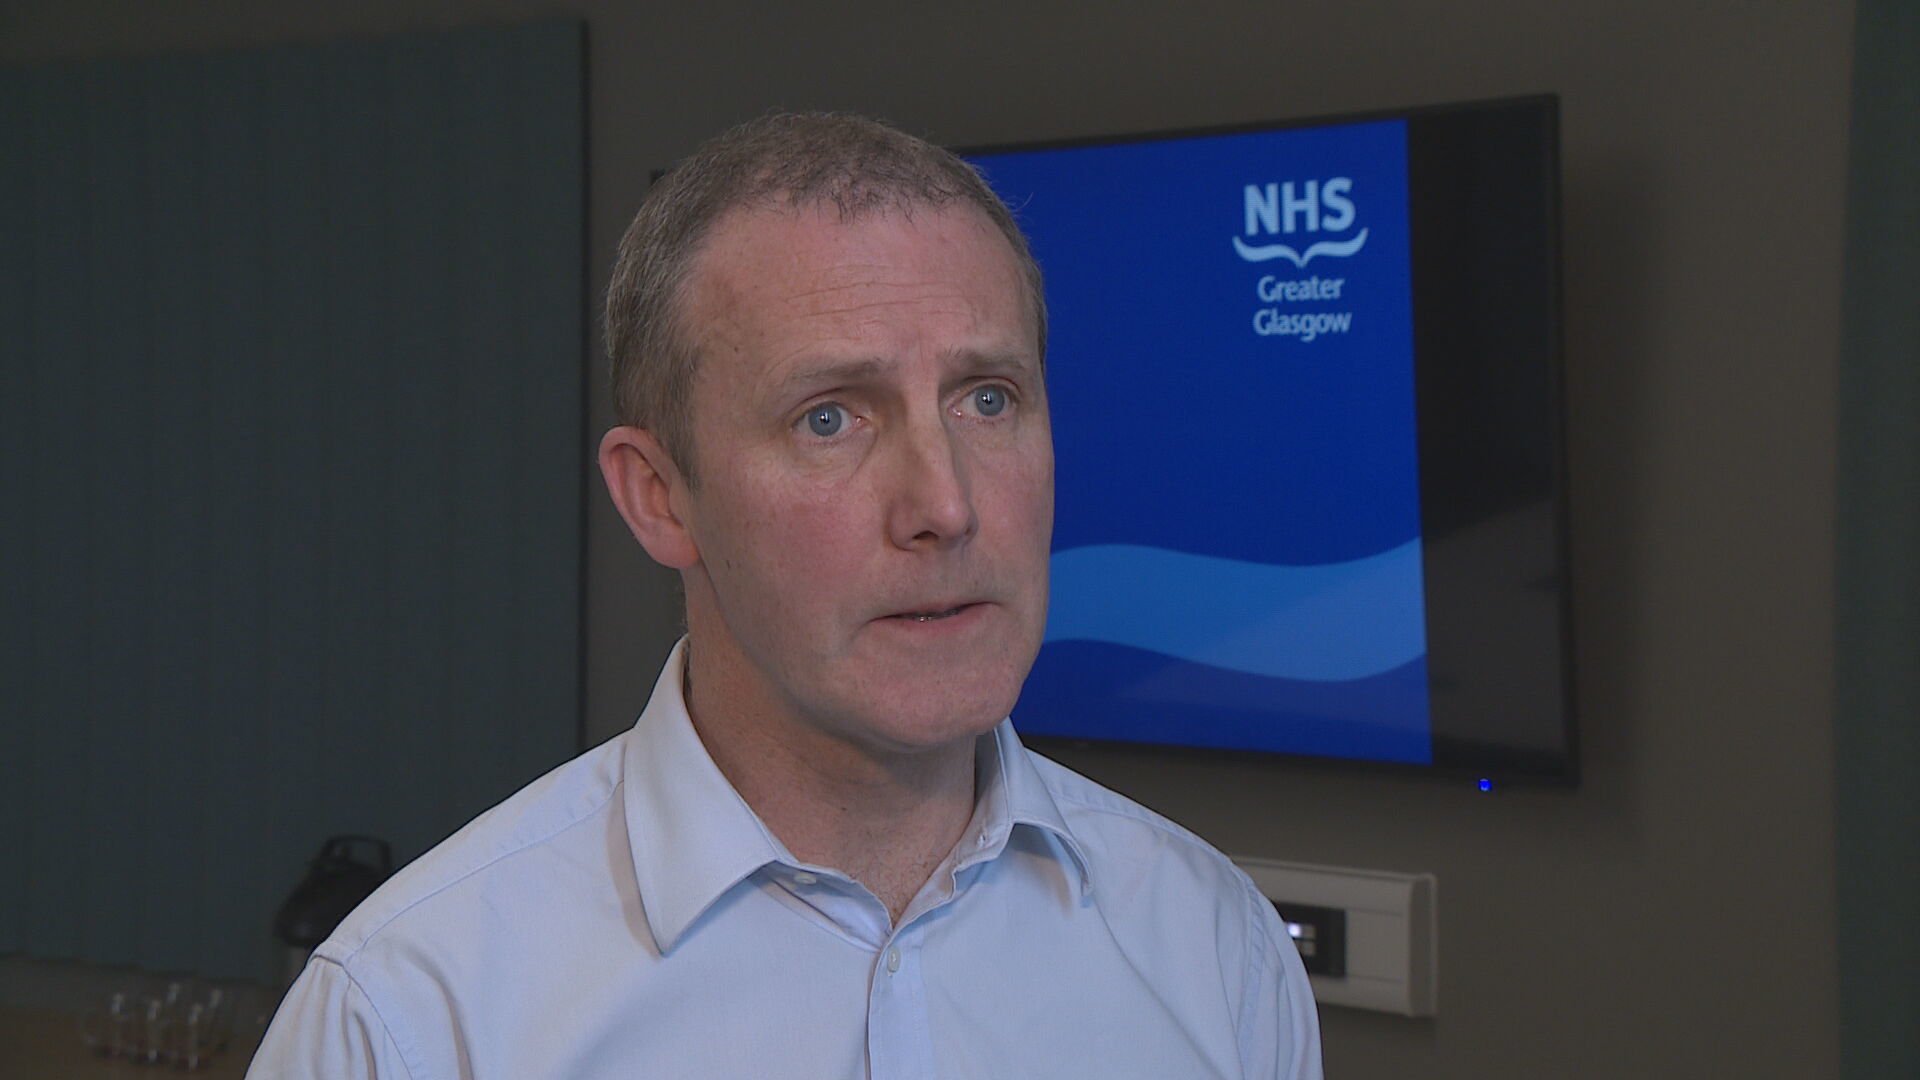 Health secretary Michael Matheson said strikes are 'in no one's interest'.